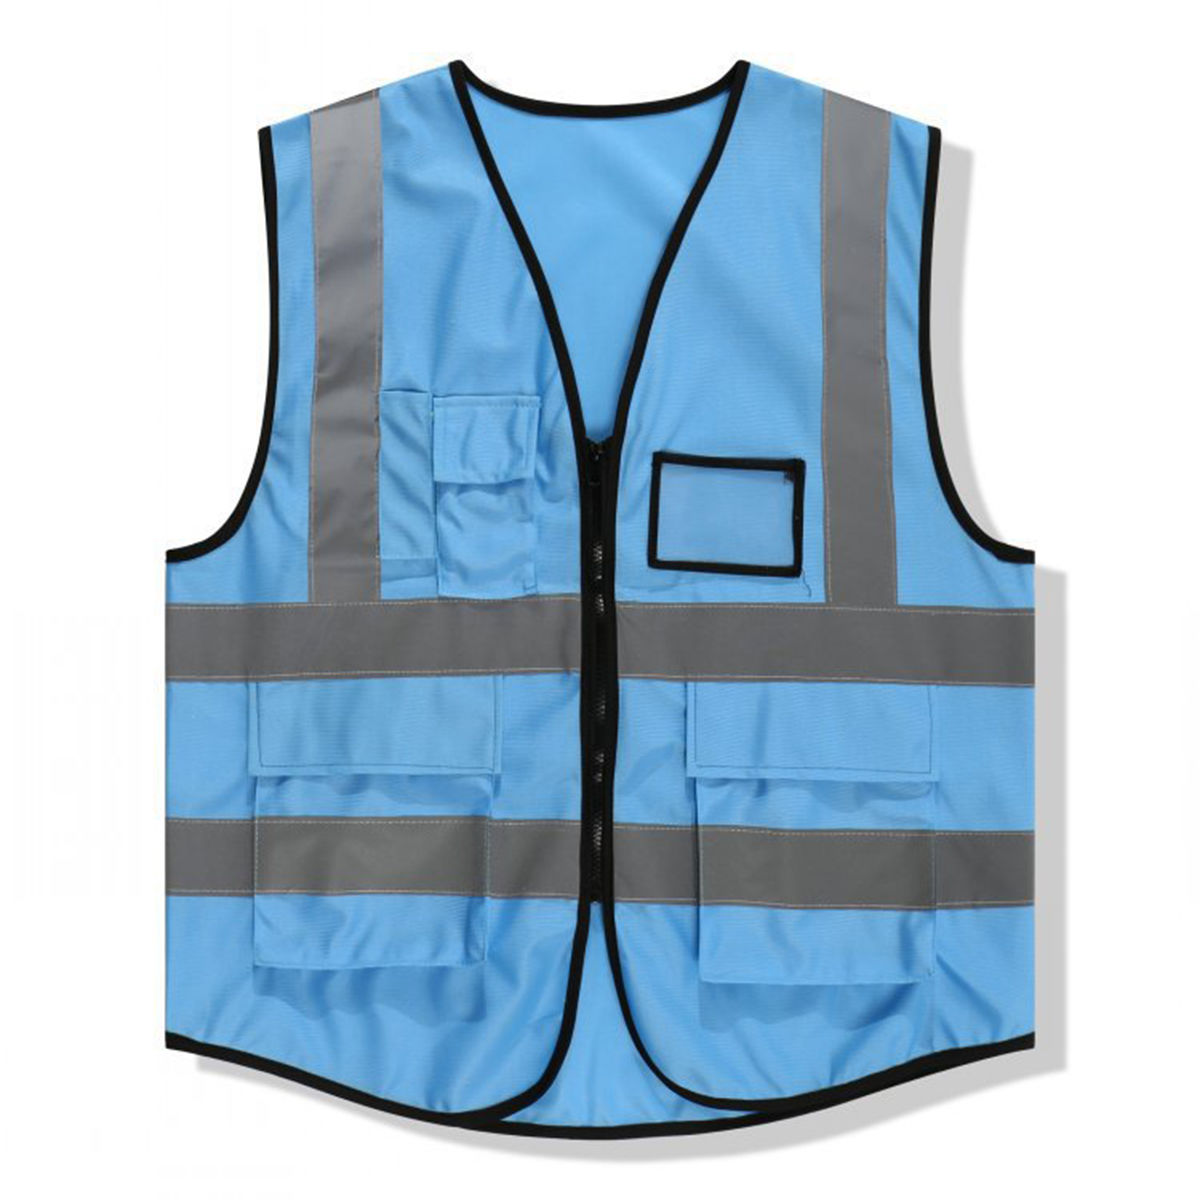 Work clothes vest reflective vest vest traffic construction safety clothing construction site reflective clothing custom printed logo